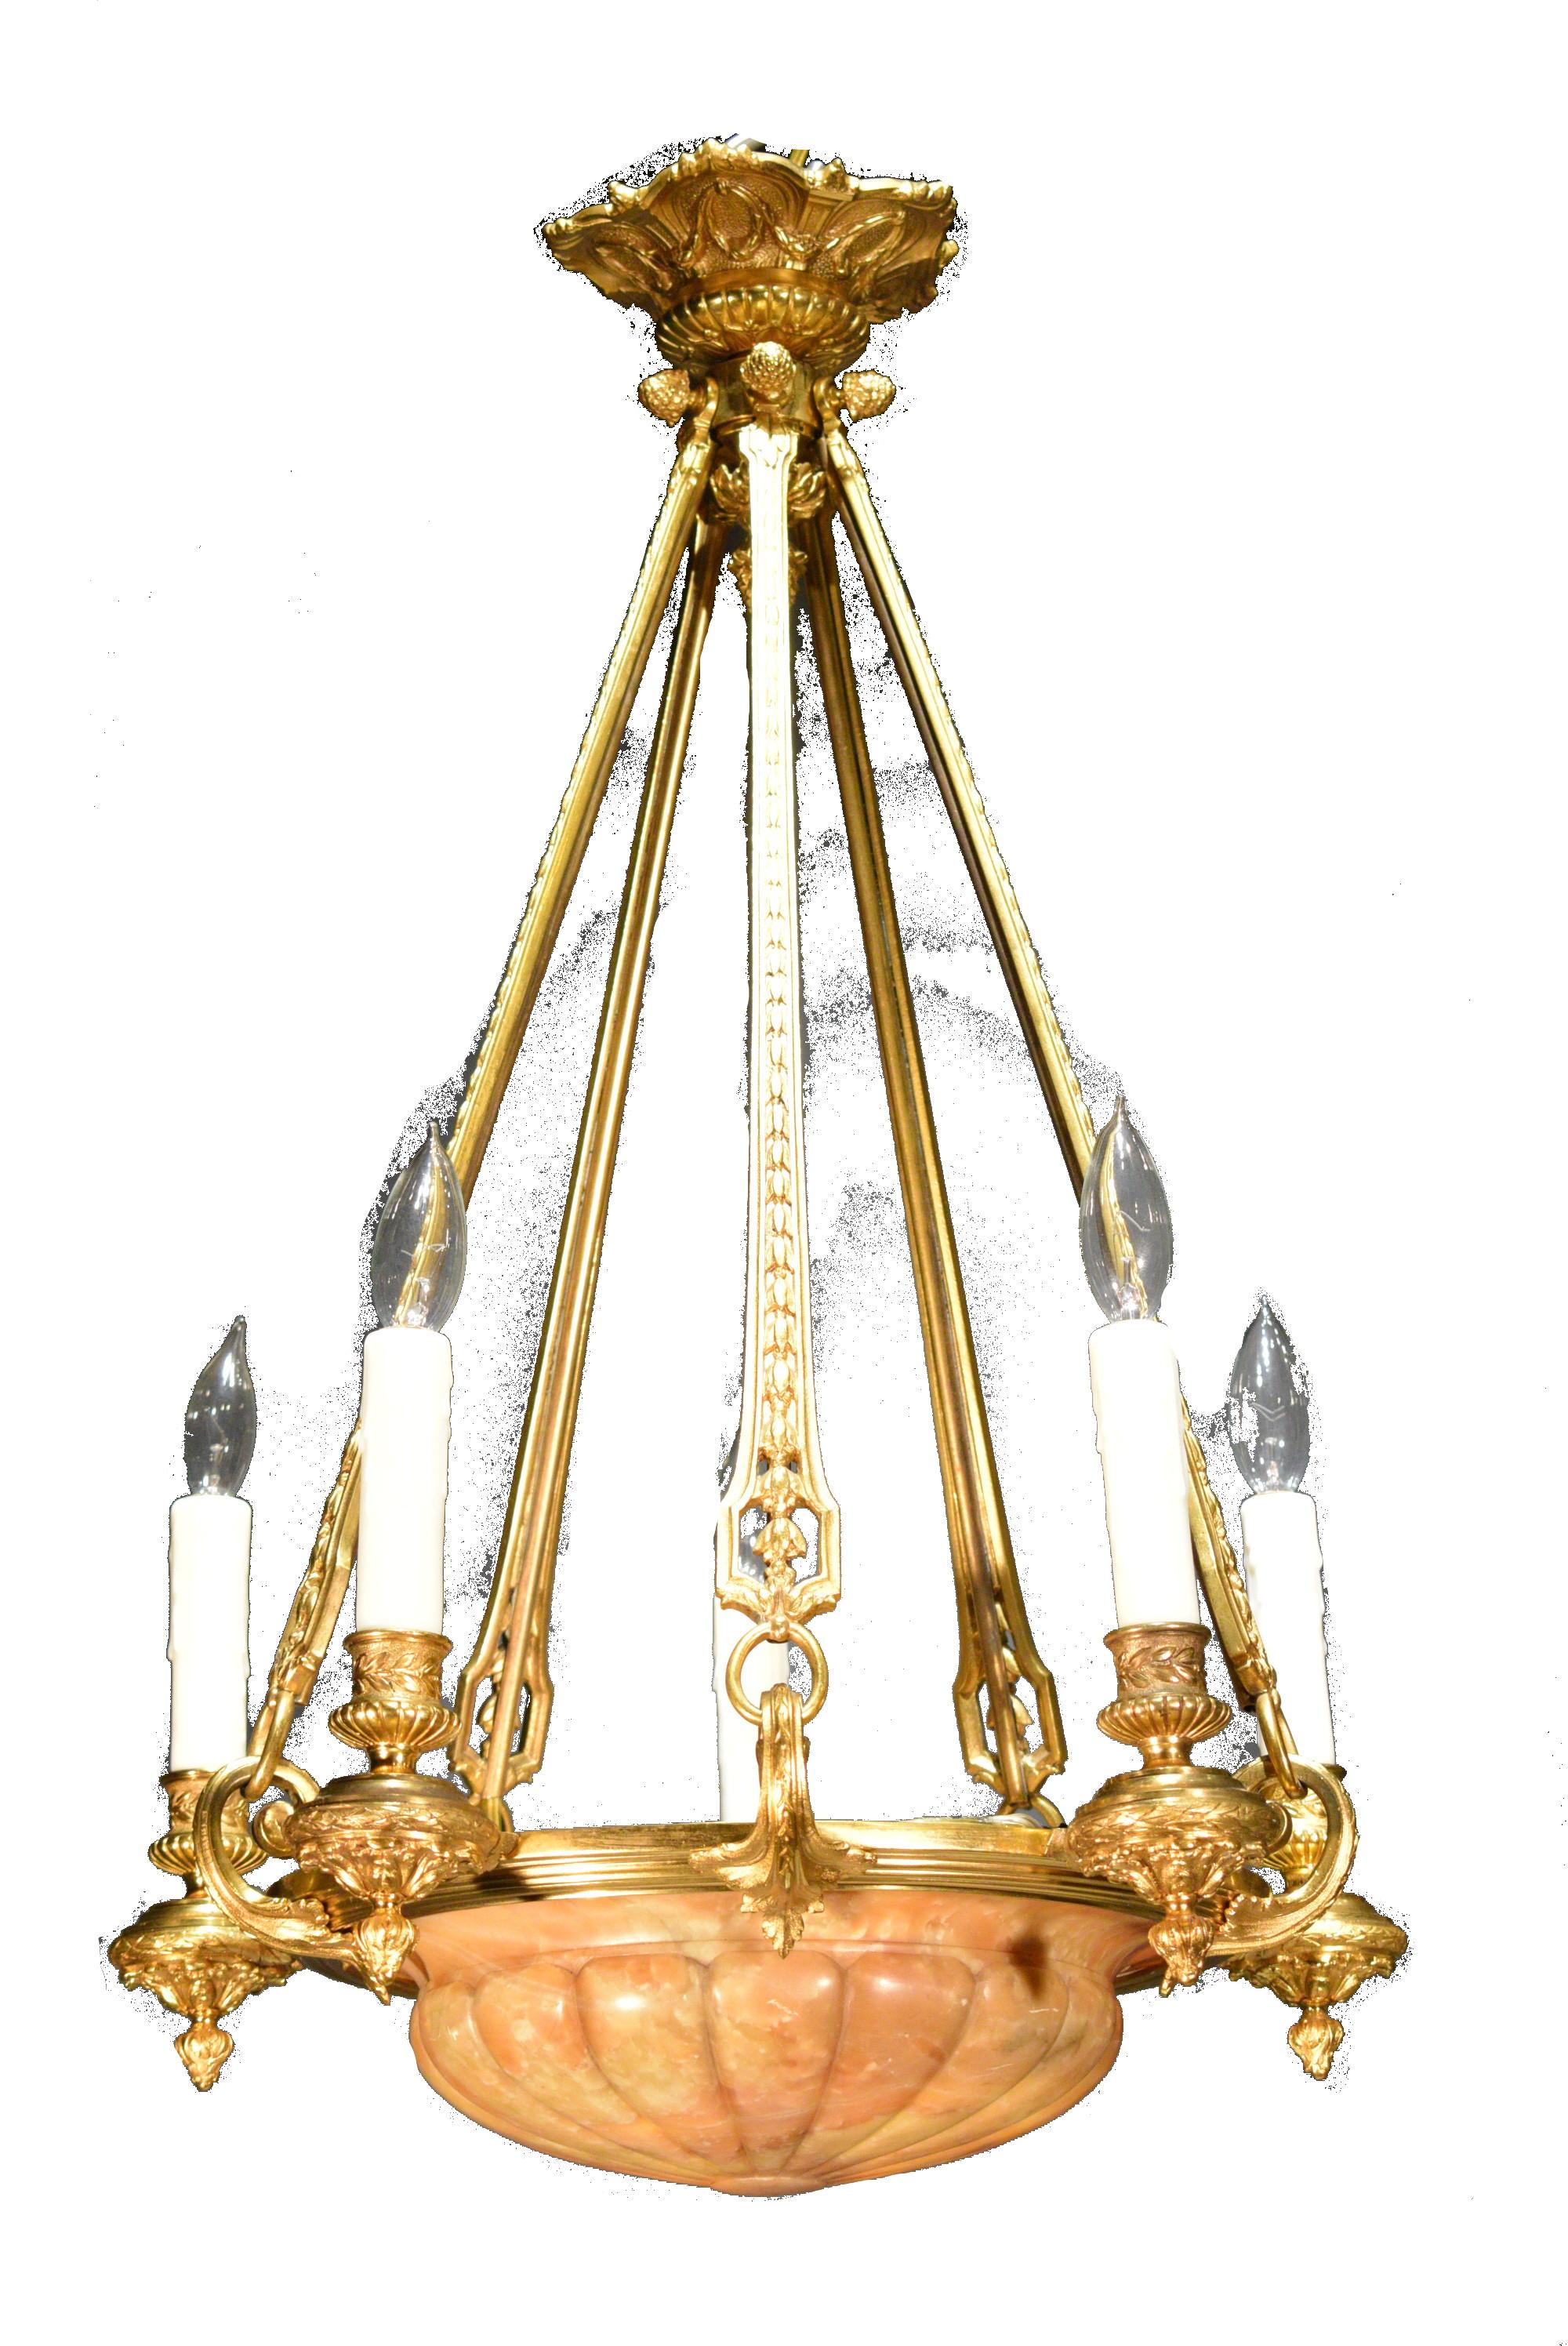 An exquisite gilt bronze pendant. Original gold. Amber color alabaster dome. 
CW4559.